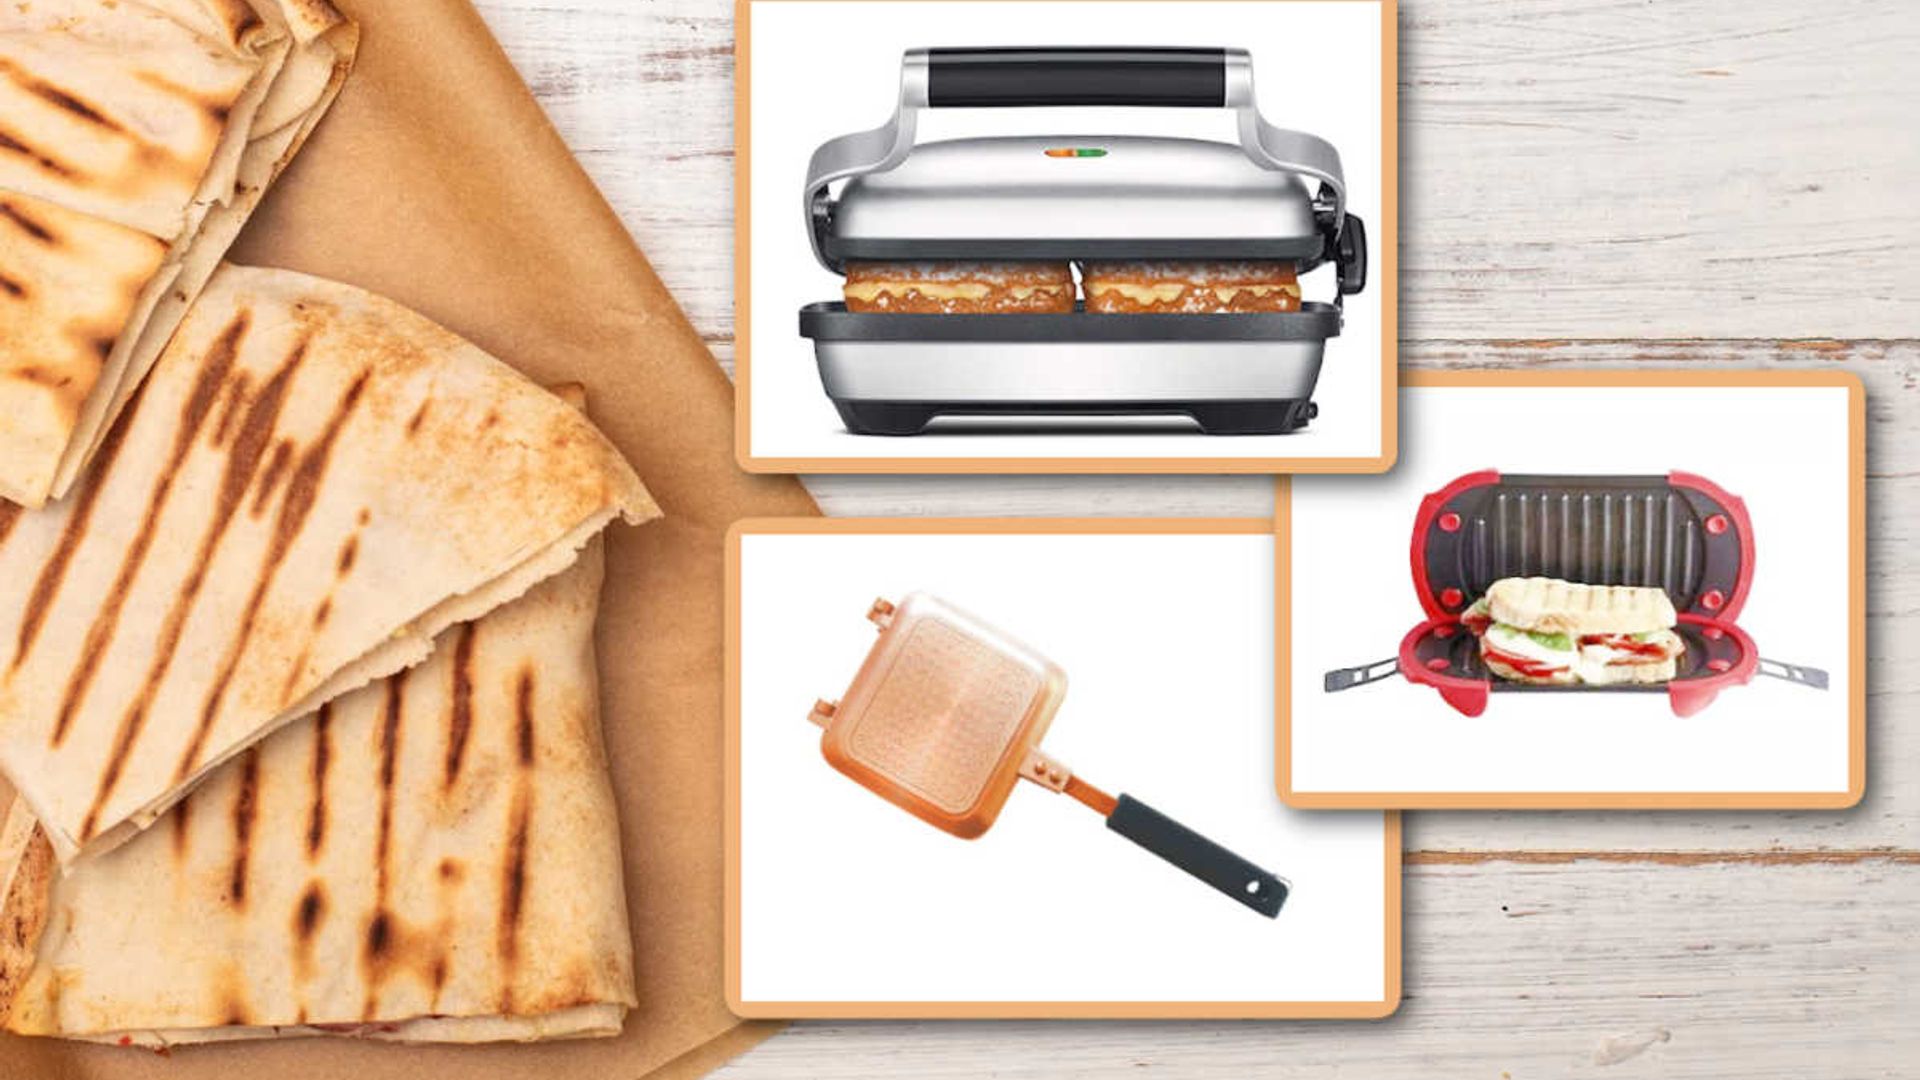 https://images.hellomagazine.com/horizon/landscape/2f1ce16101bf-tiktok-hack-best-toastie-maker-sandwich-grill-2-t.jpg